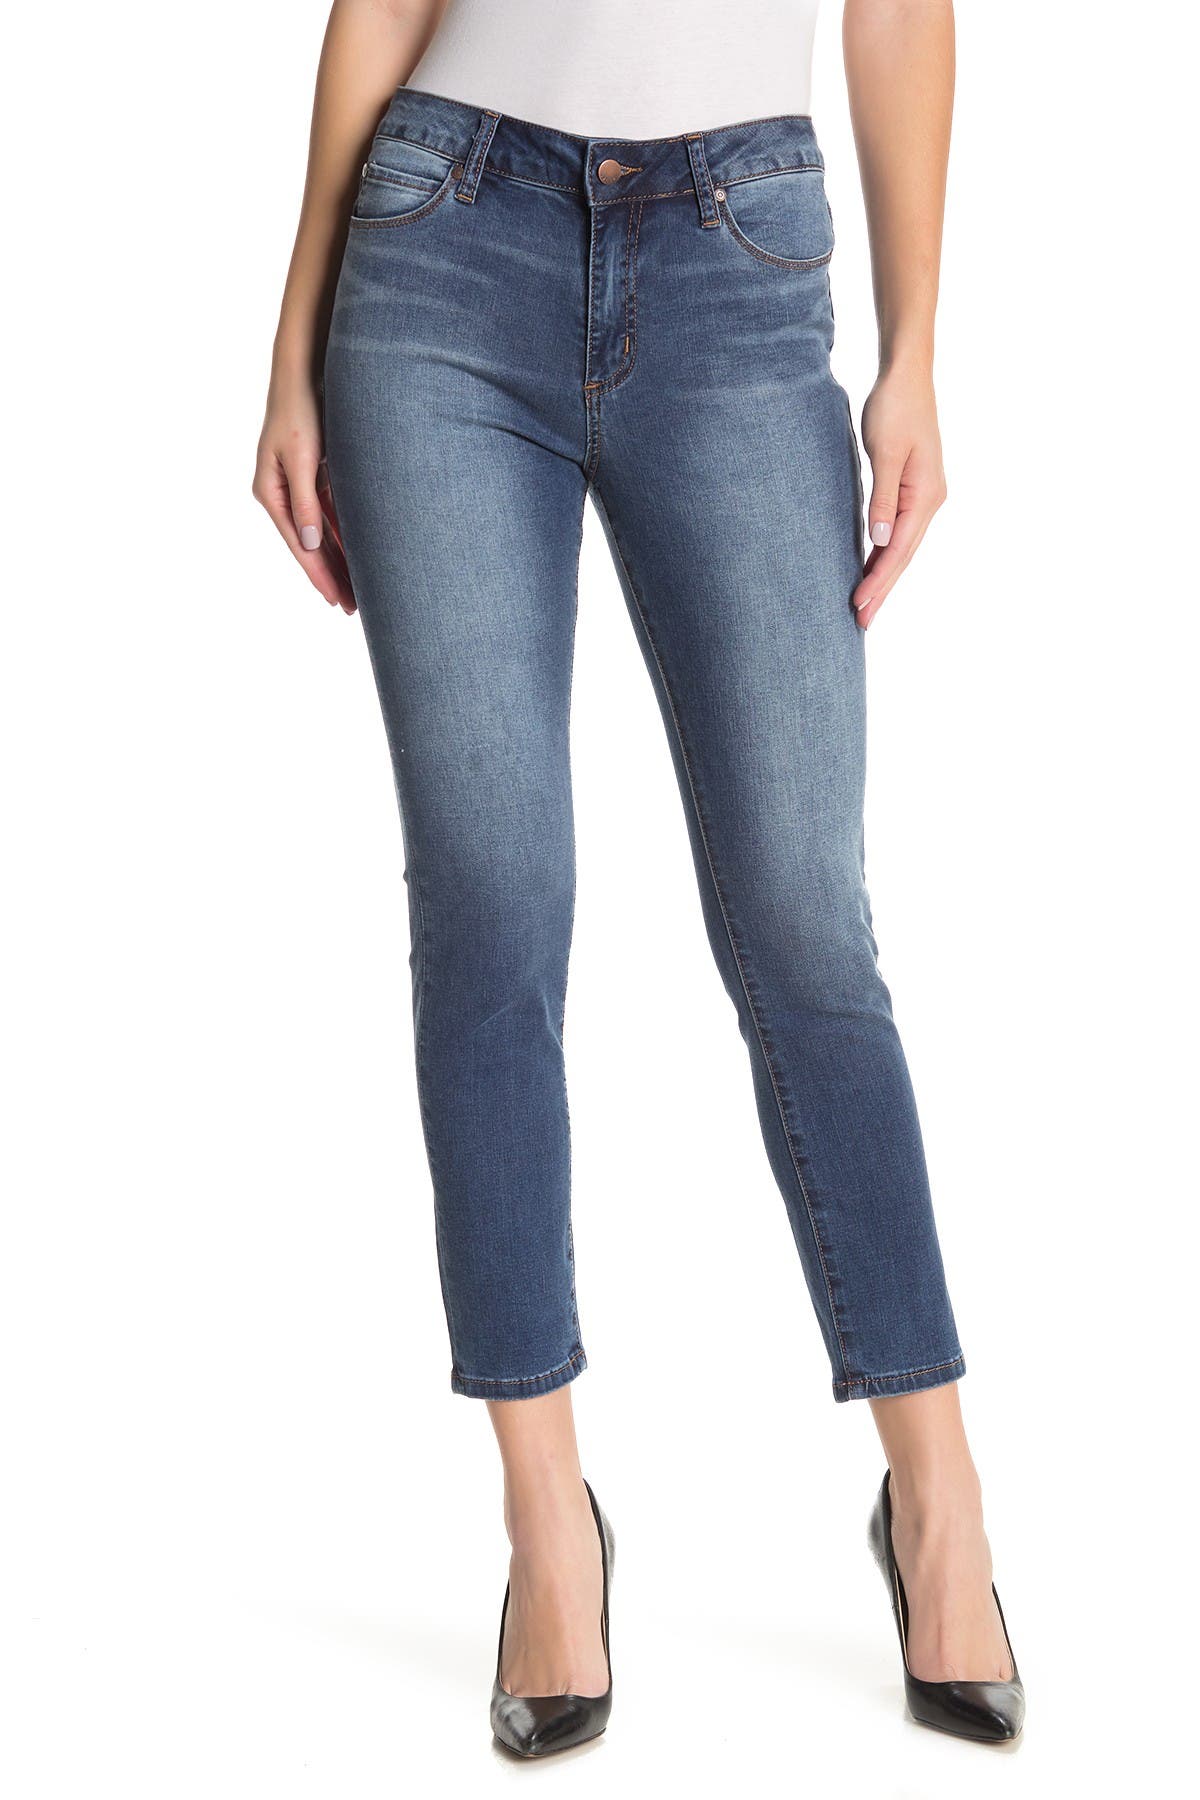 tahari classic skinny jeans